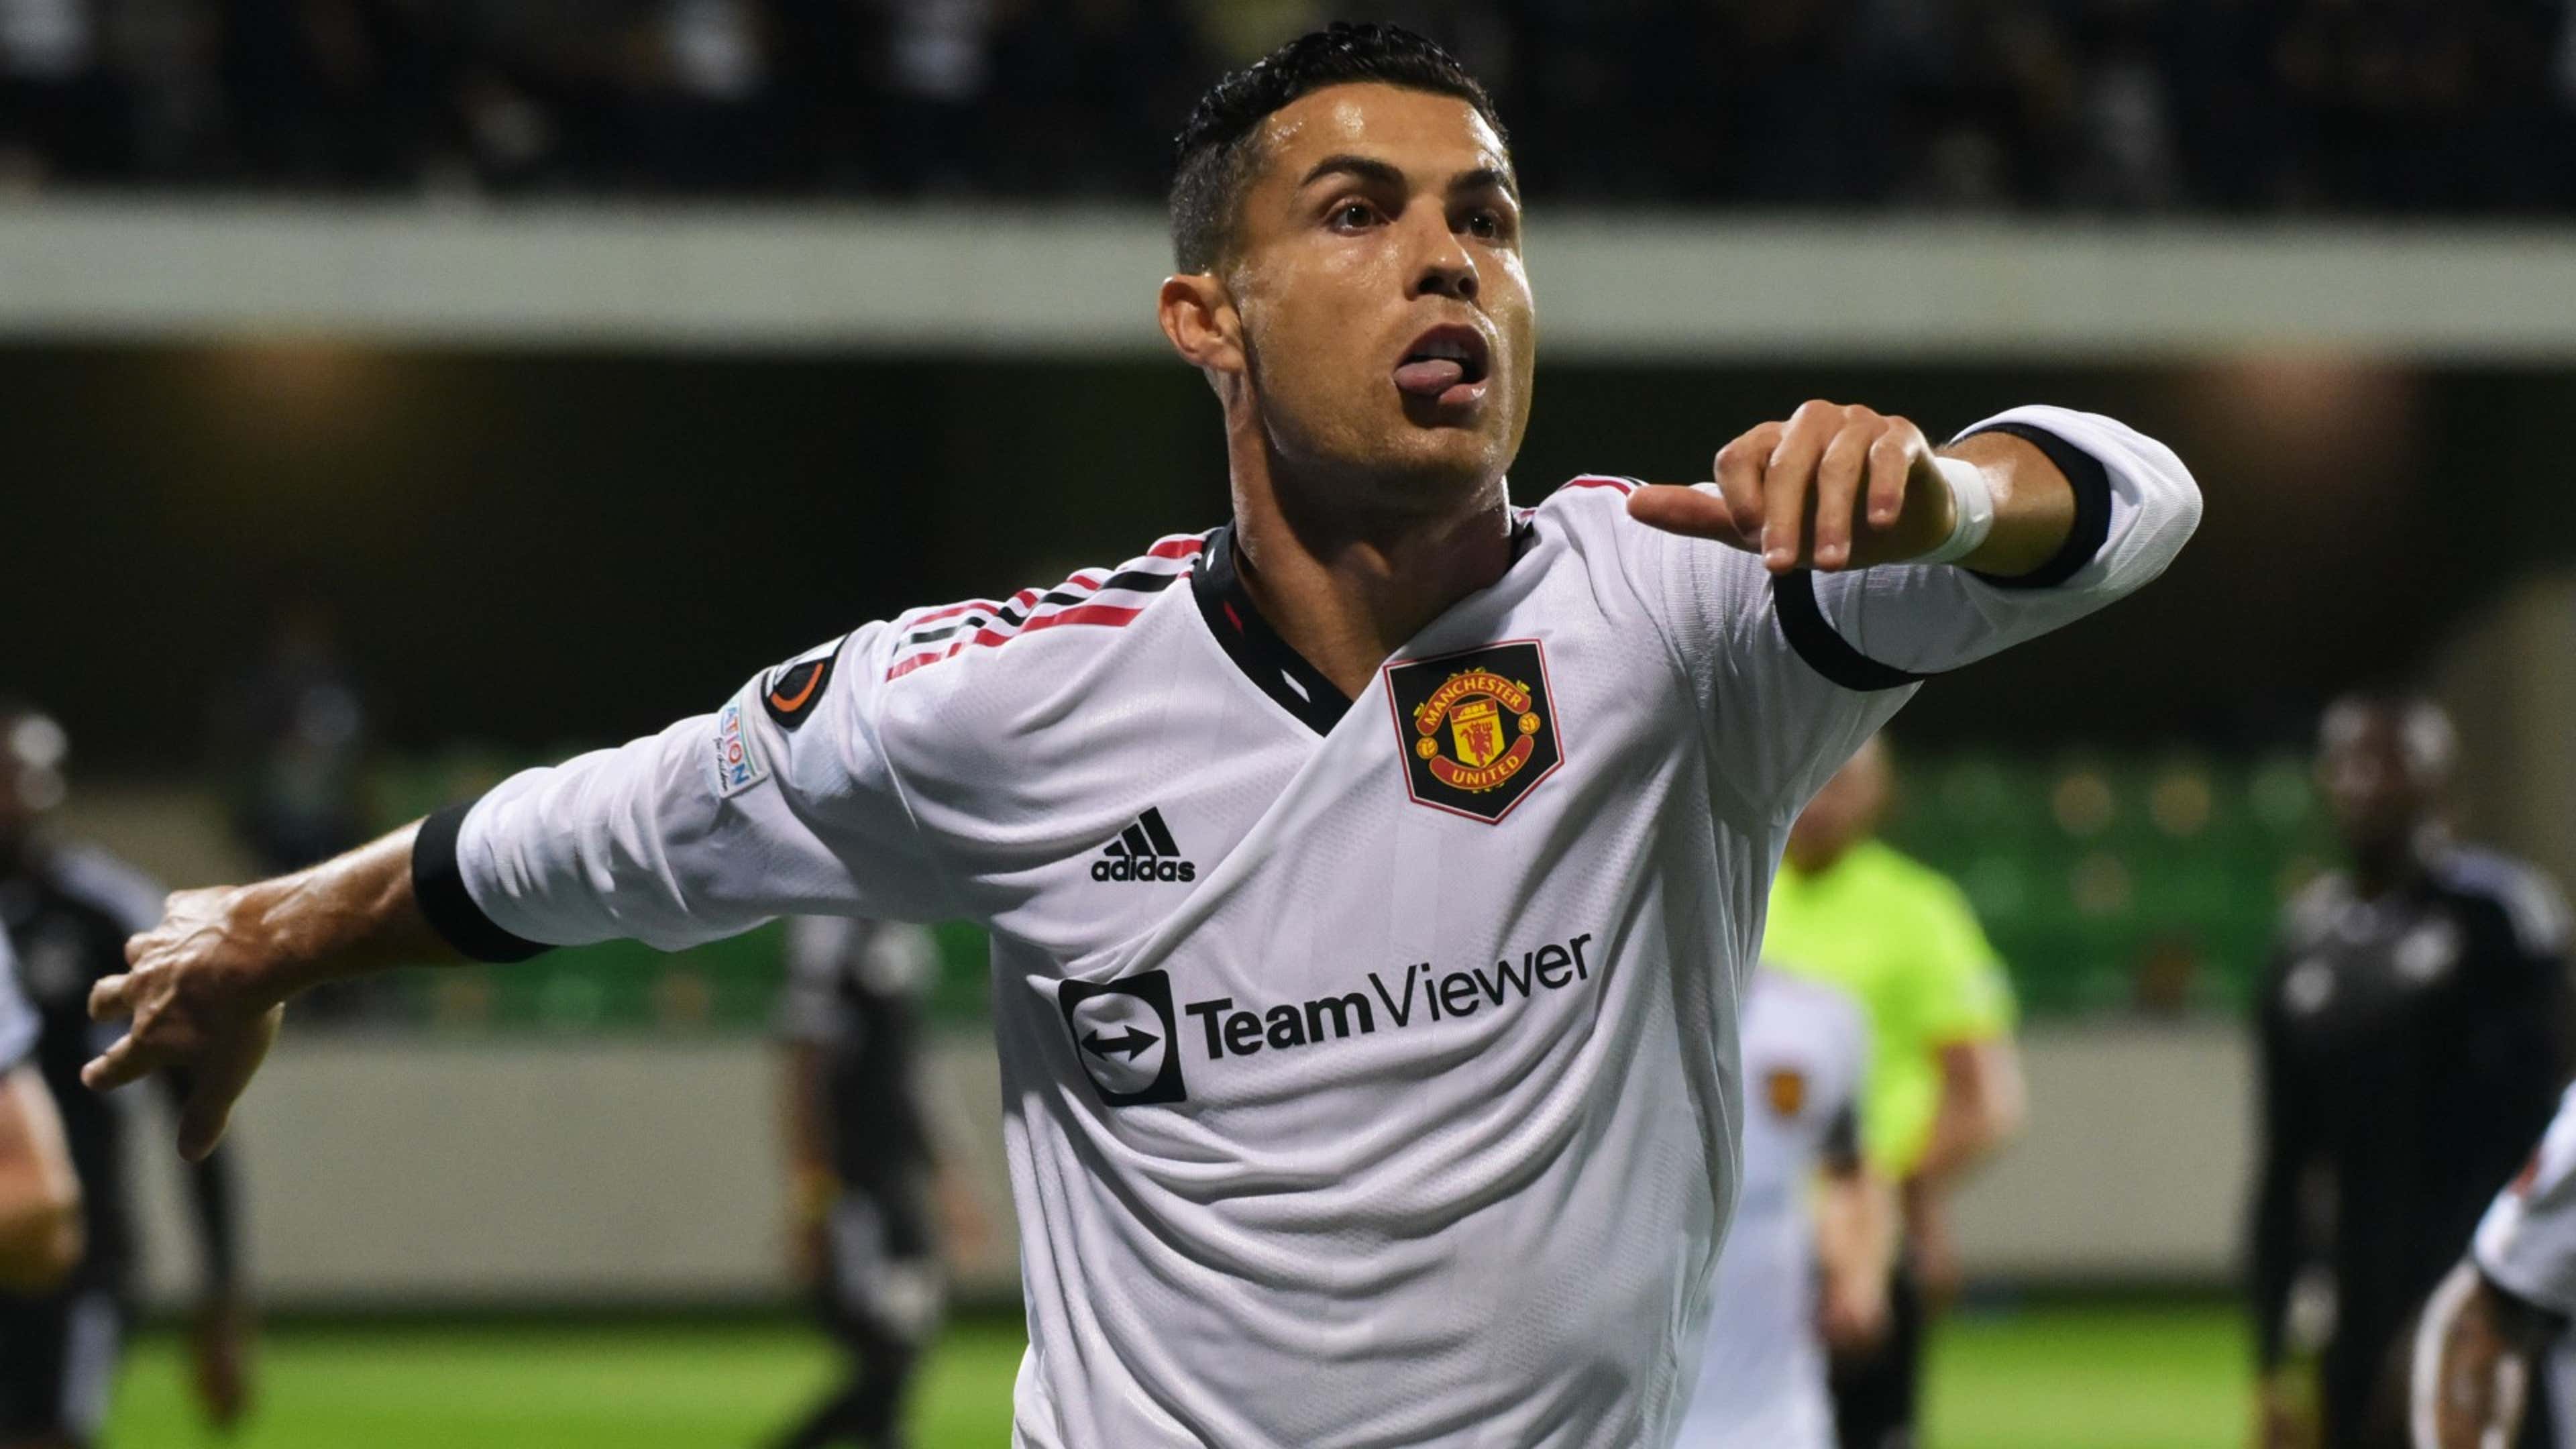 Europa League: Ronaldo scores as United record first win in Europa